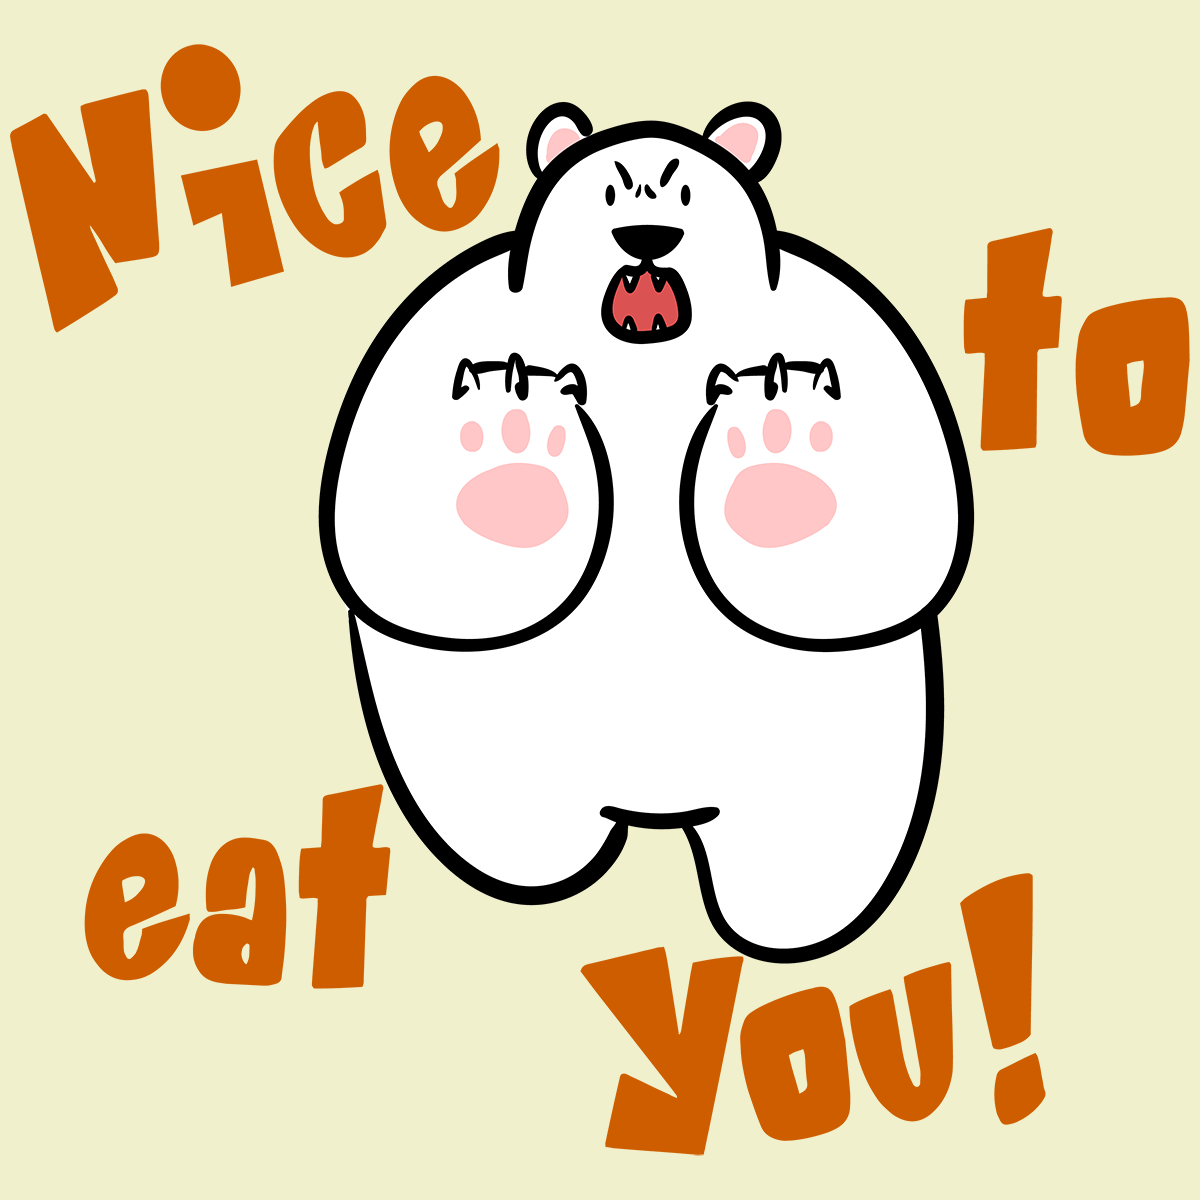 Nice to eat you